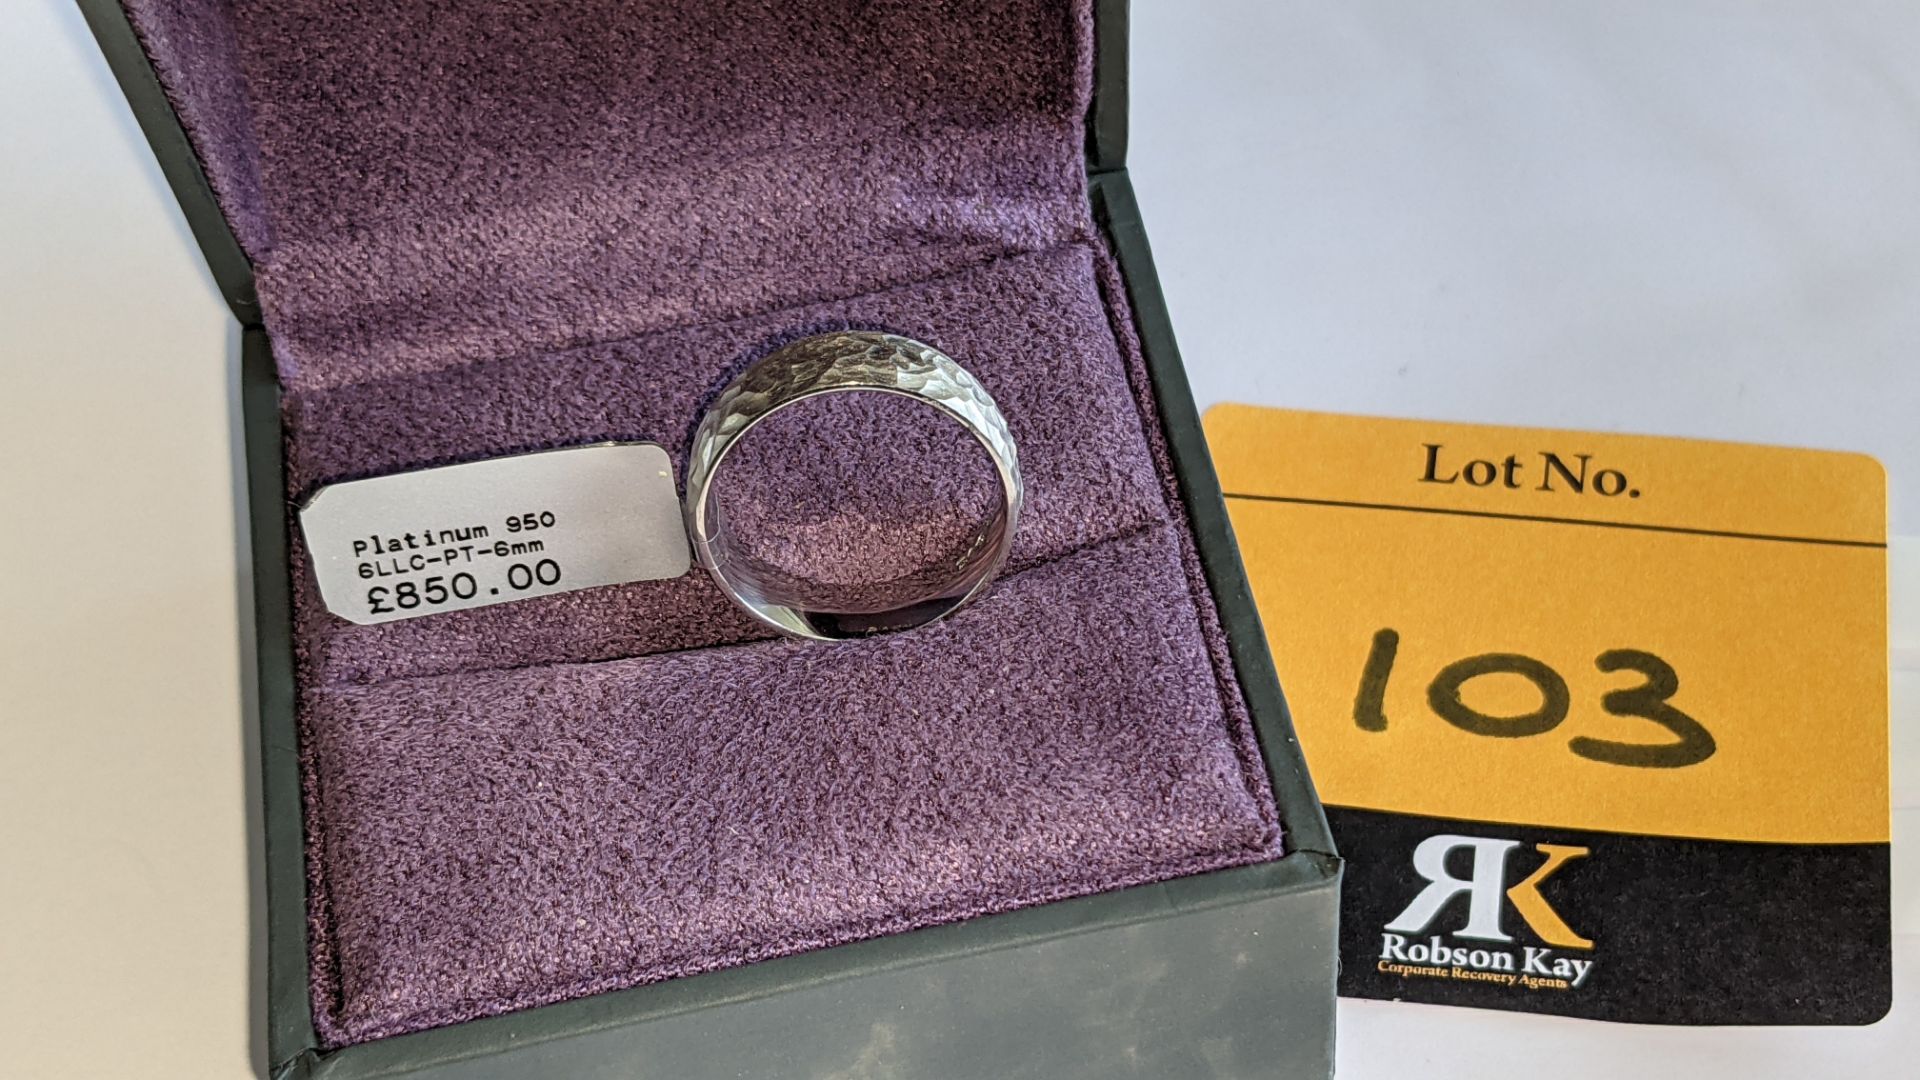 Platinum 950 6mm textured wedding ring. RRP £850